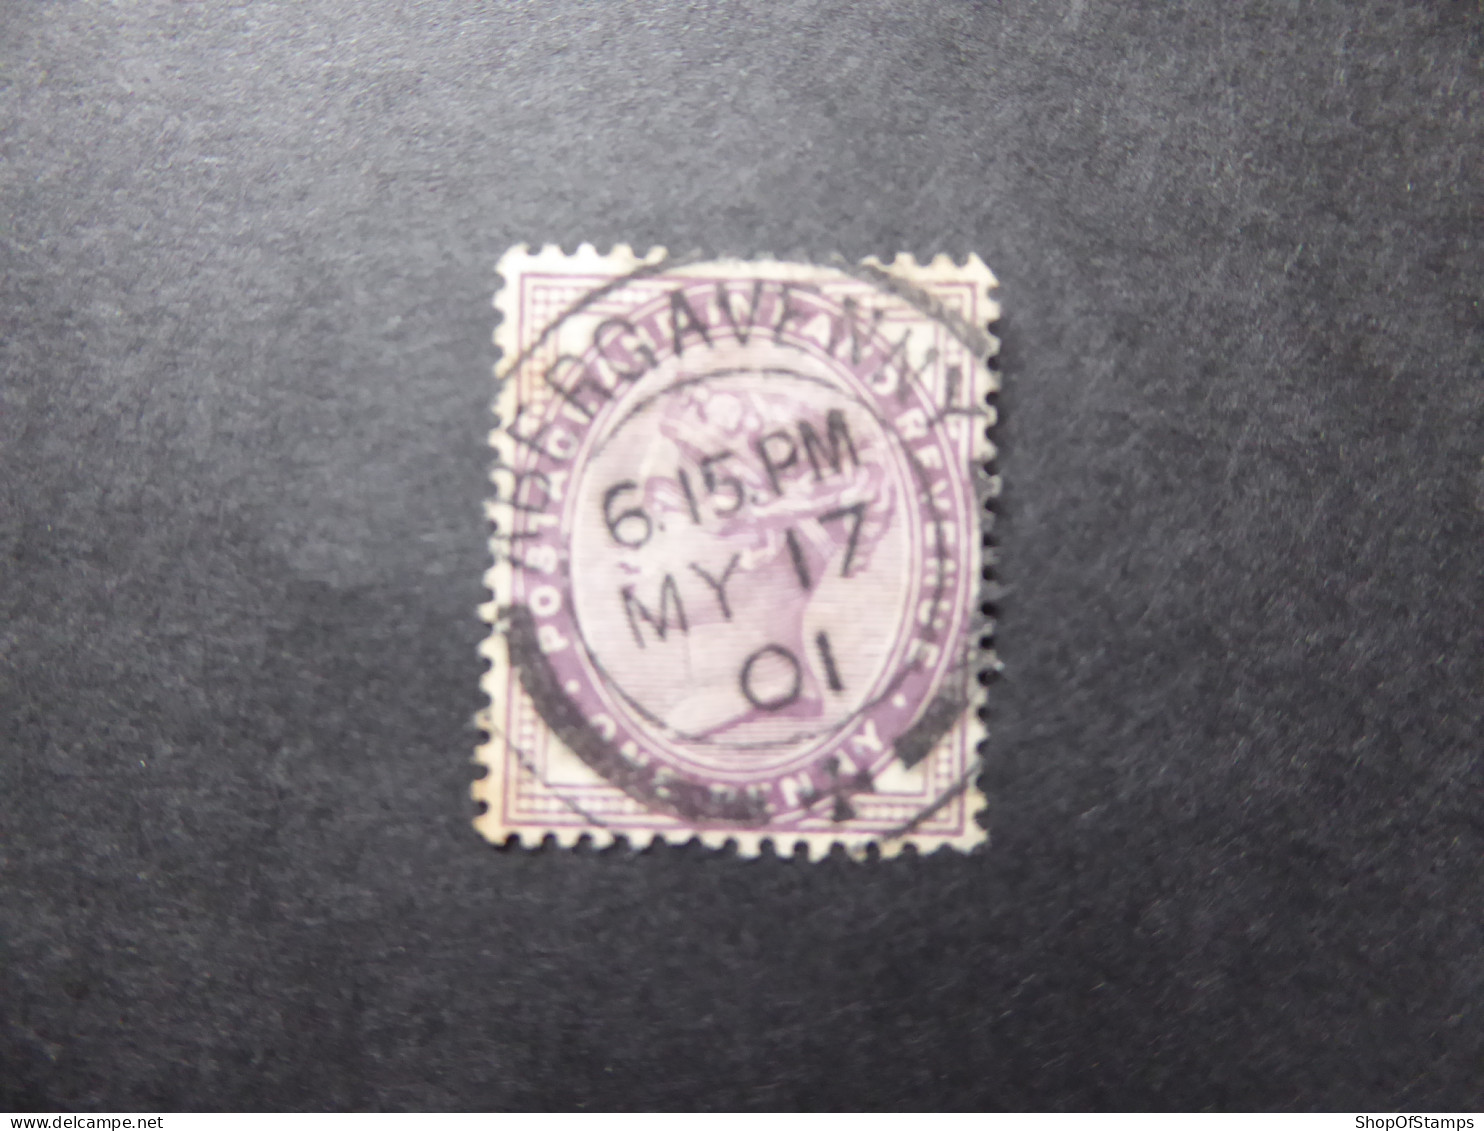 GREAT BRITAIN SG 174 One Penny 1881 Postmark  ABERGAVENNY 1901  - Ohne Zuordnung